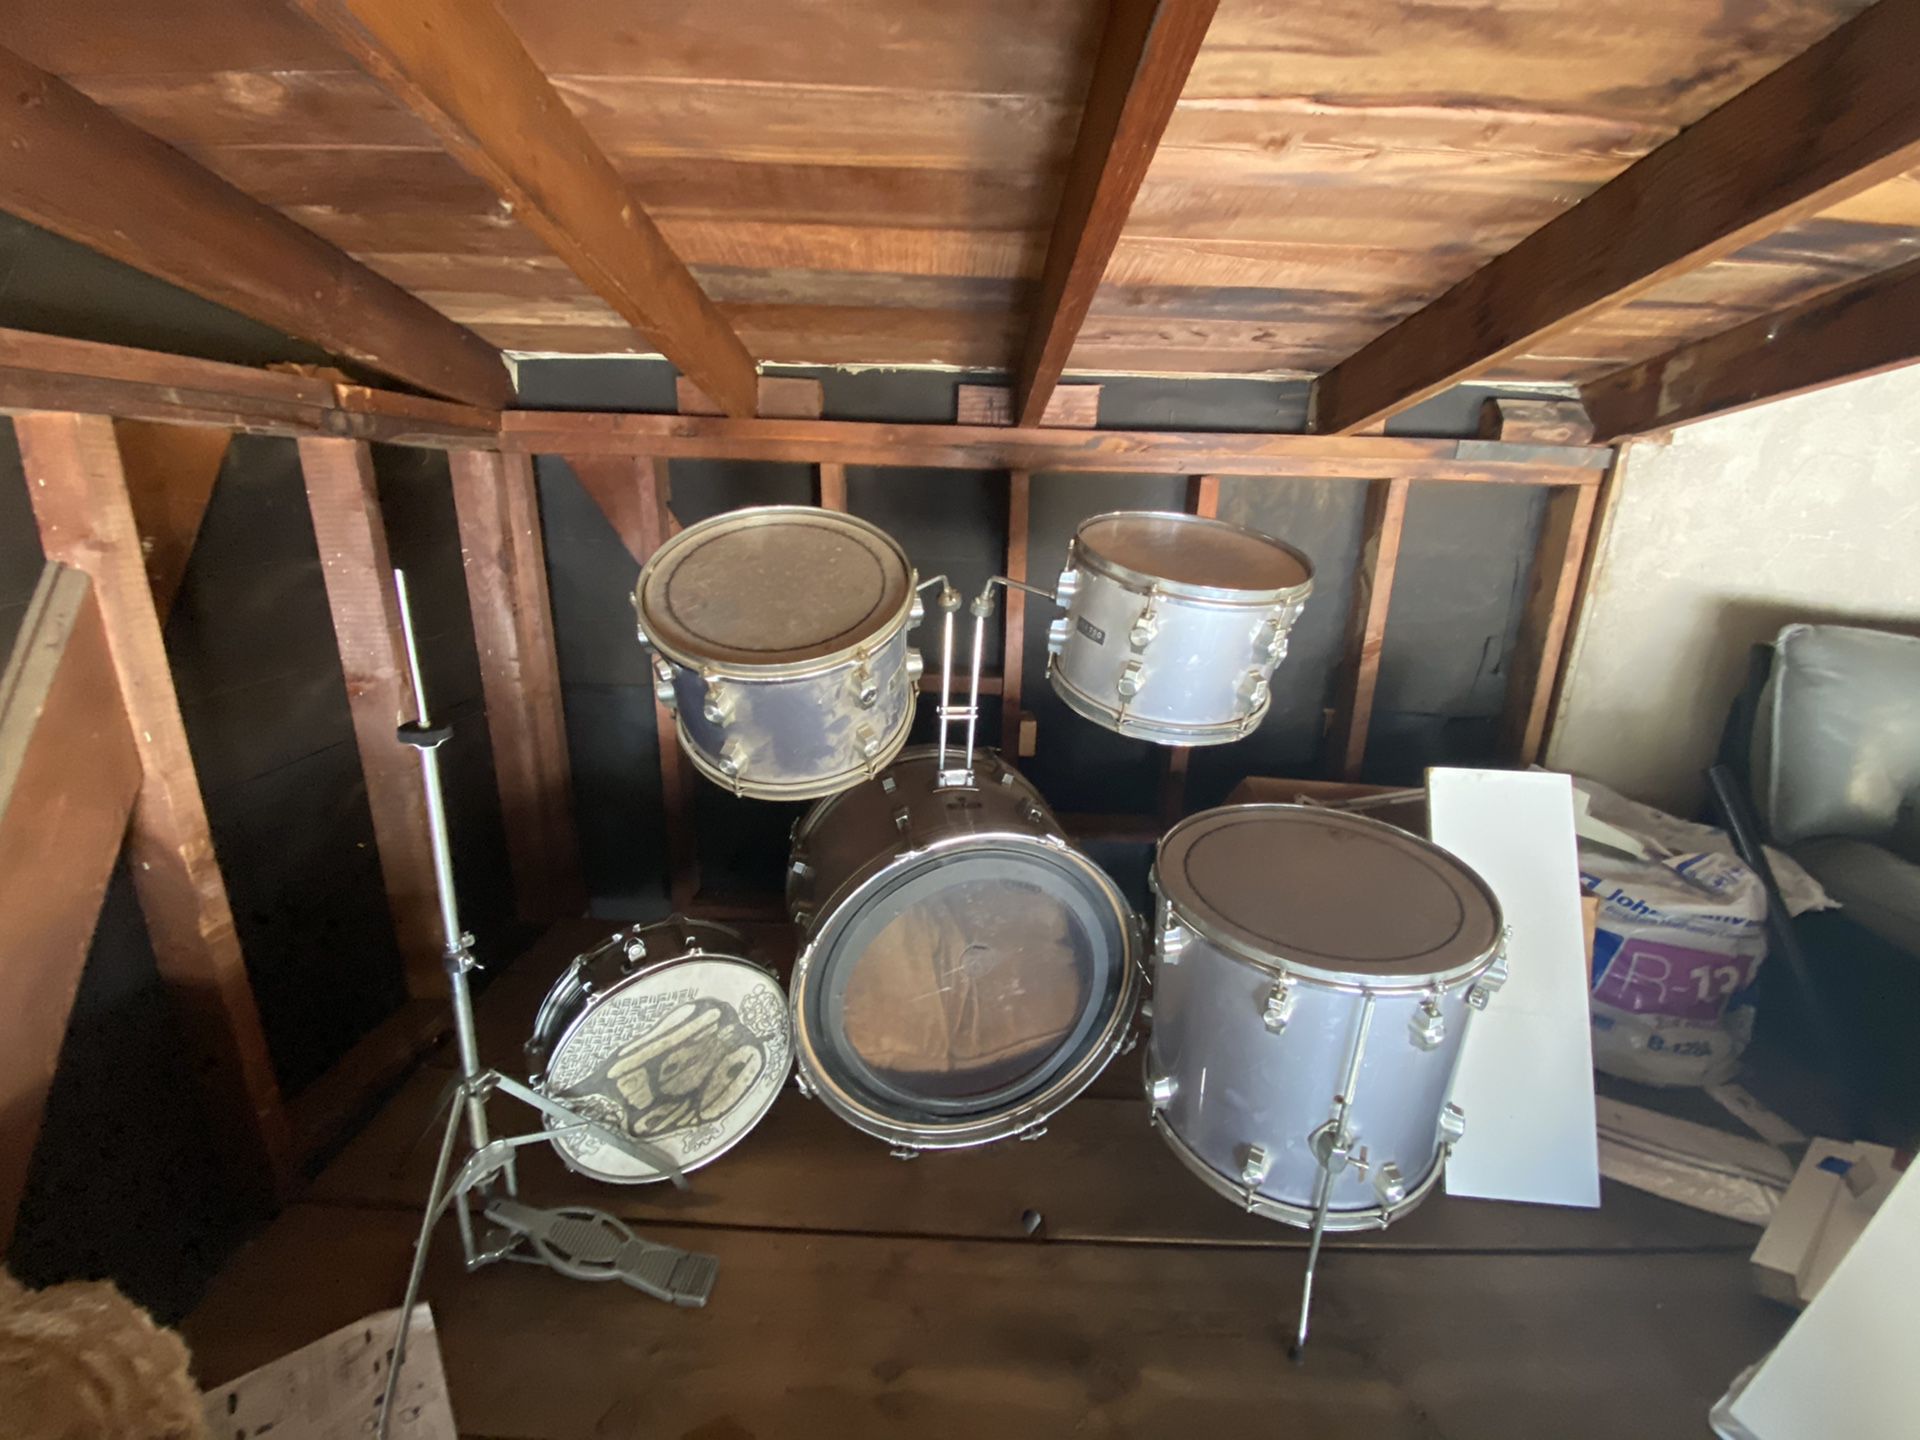 CB700 partial drum set